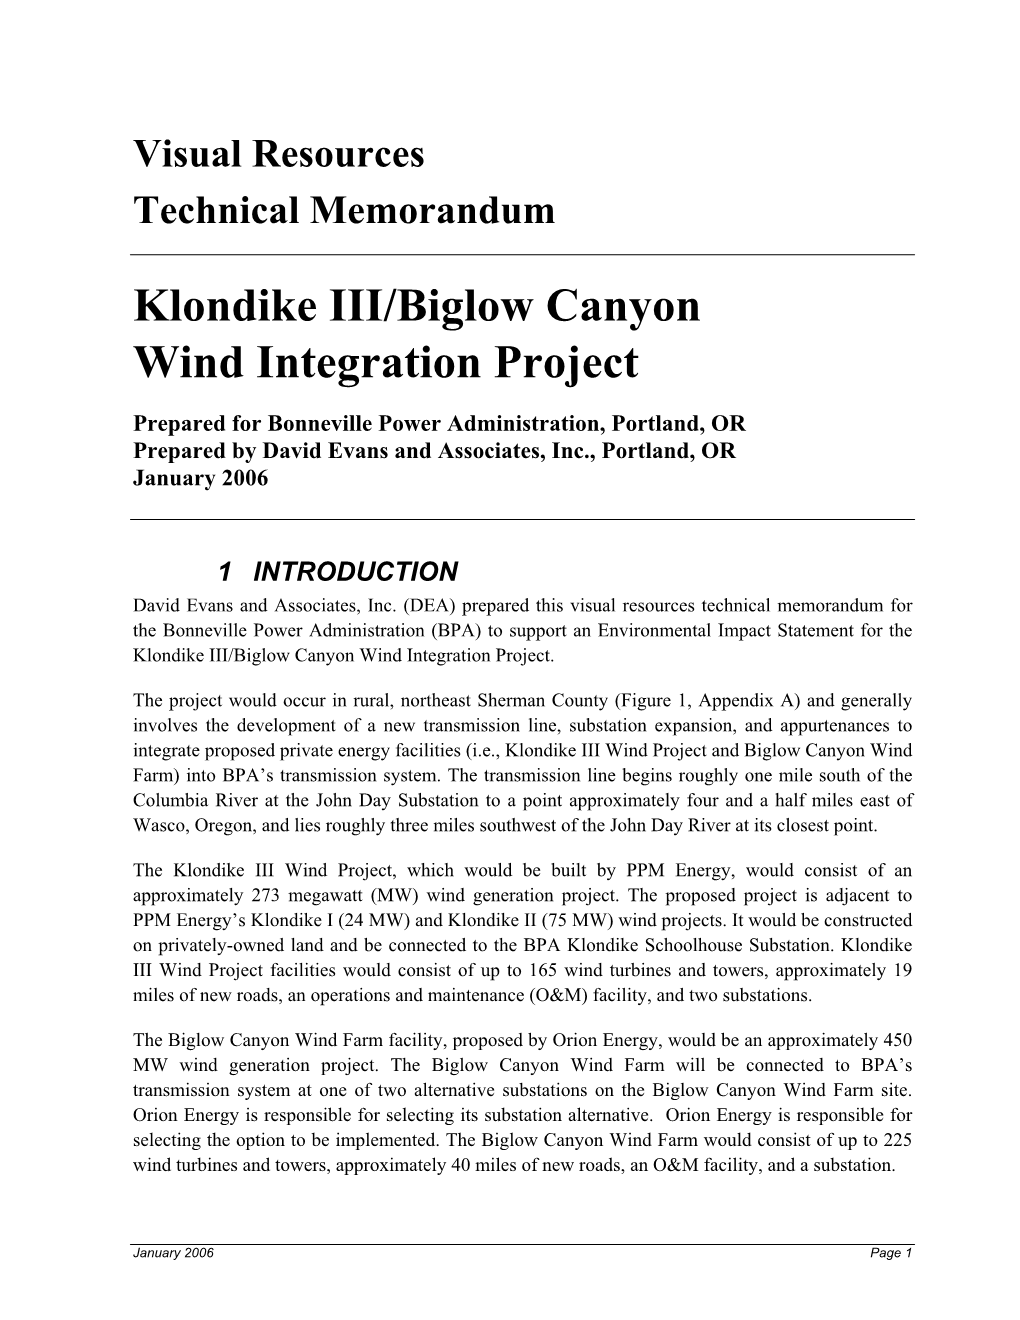 Klondike III/Biglow Canyon Wind Integration Project